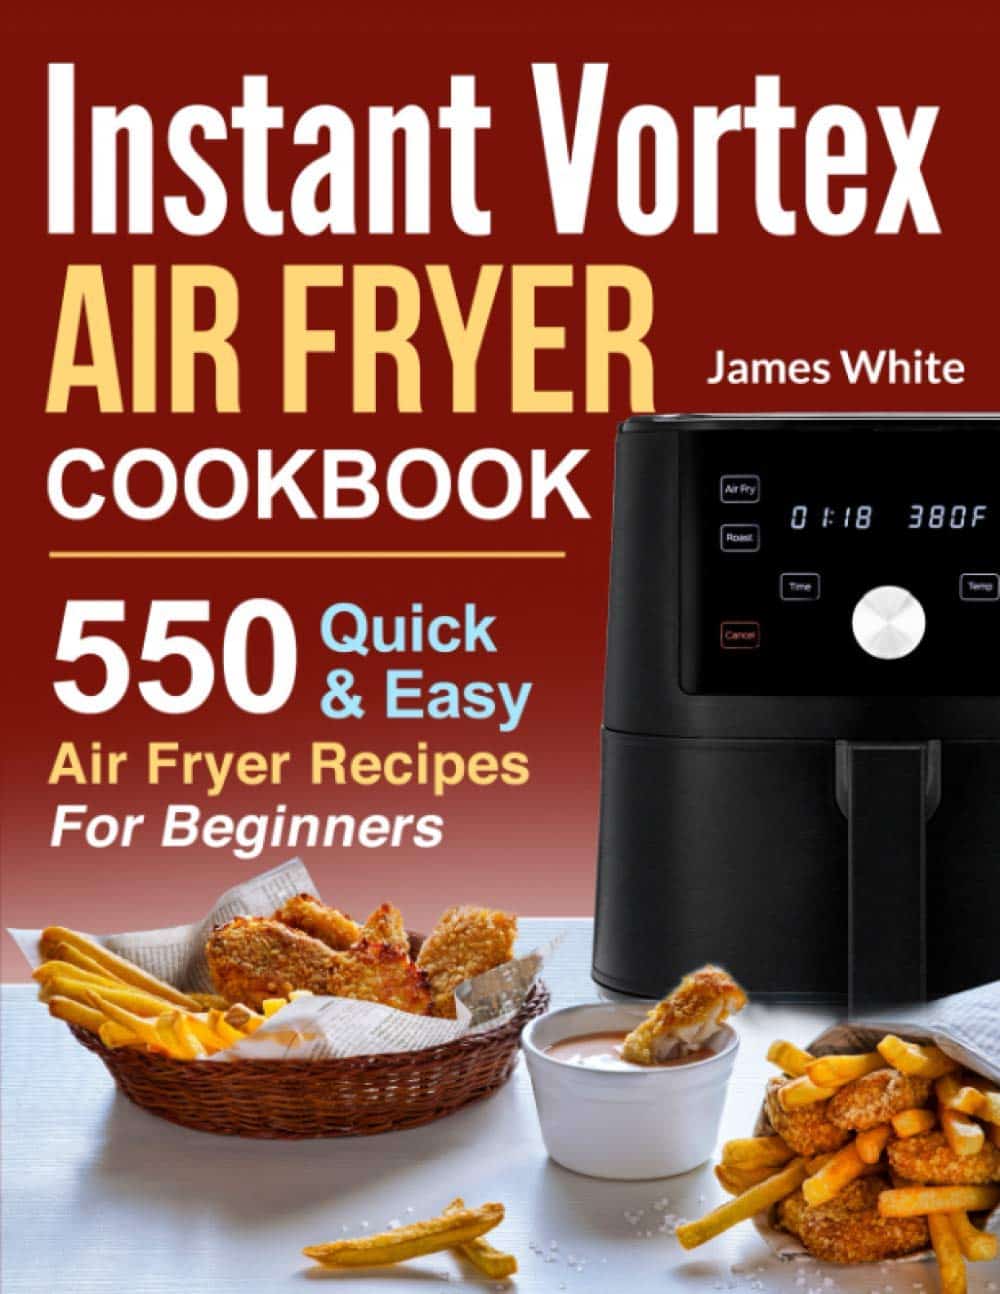 Great Cookbooks for the Instant Vortex Plus Air Fryer Vortex Recipes